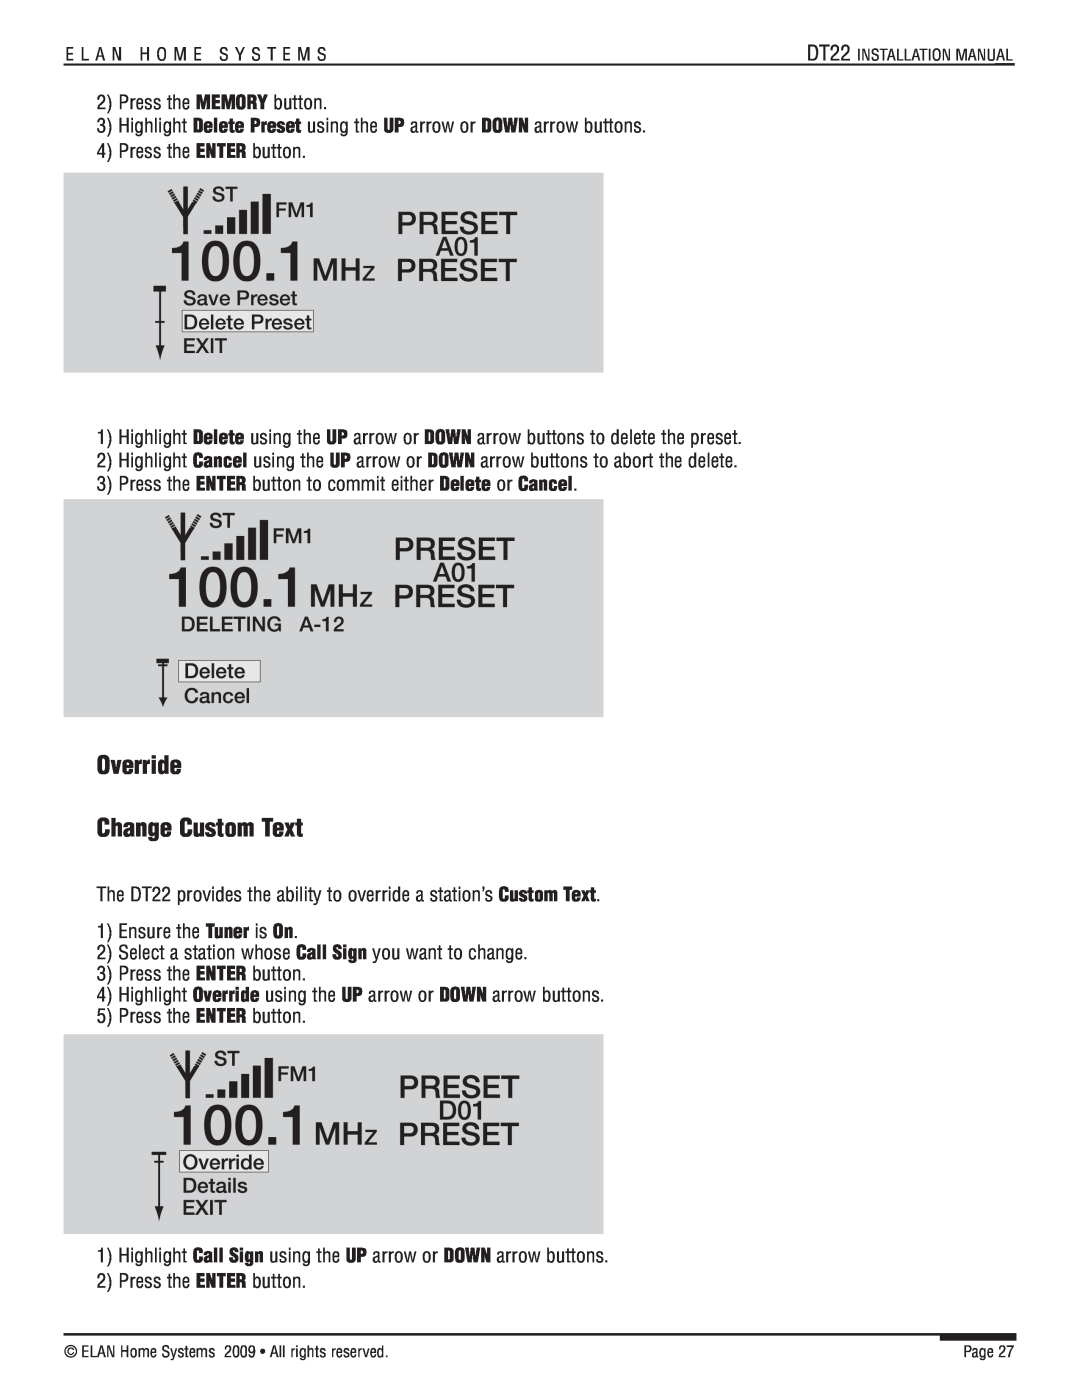 ELAN Home Systems DT22 manual Override Change Custom Text, 100.1MHZ PRESET, Save Preset Delete Preset EXIT 